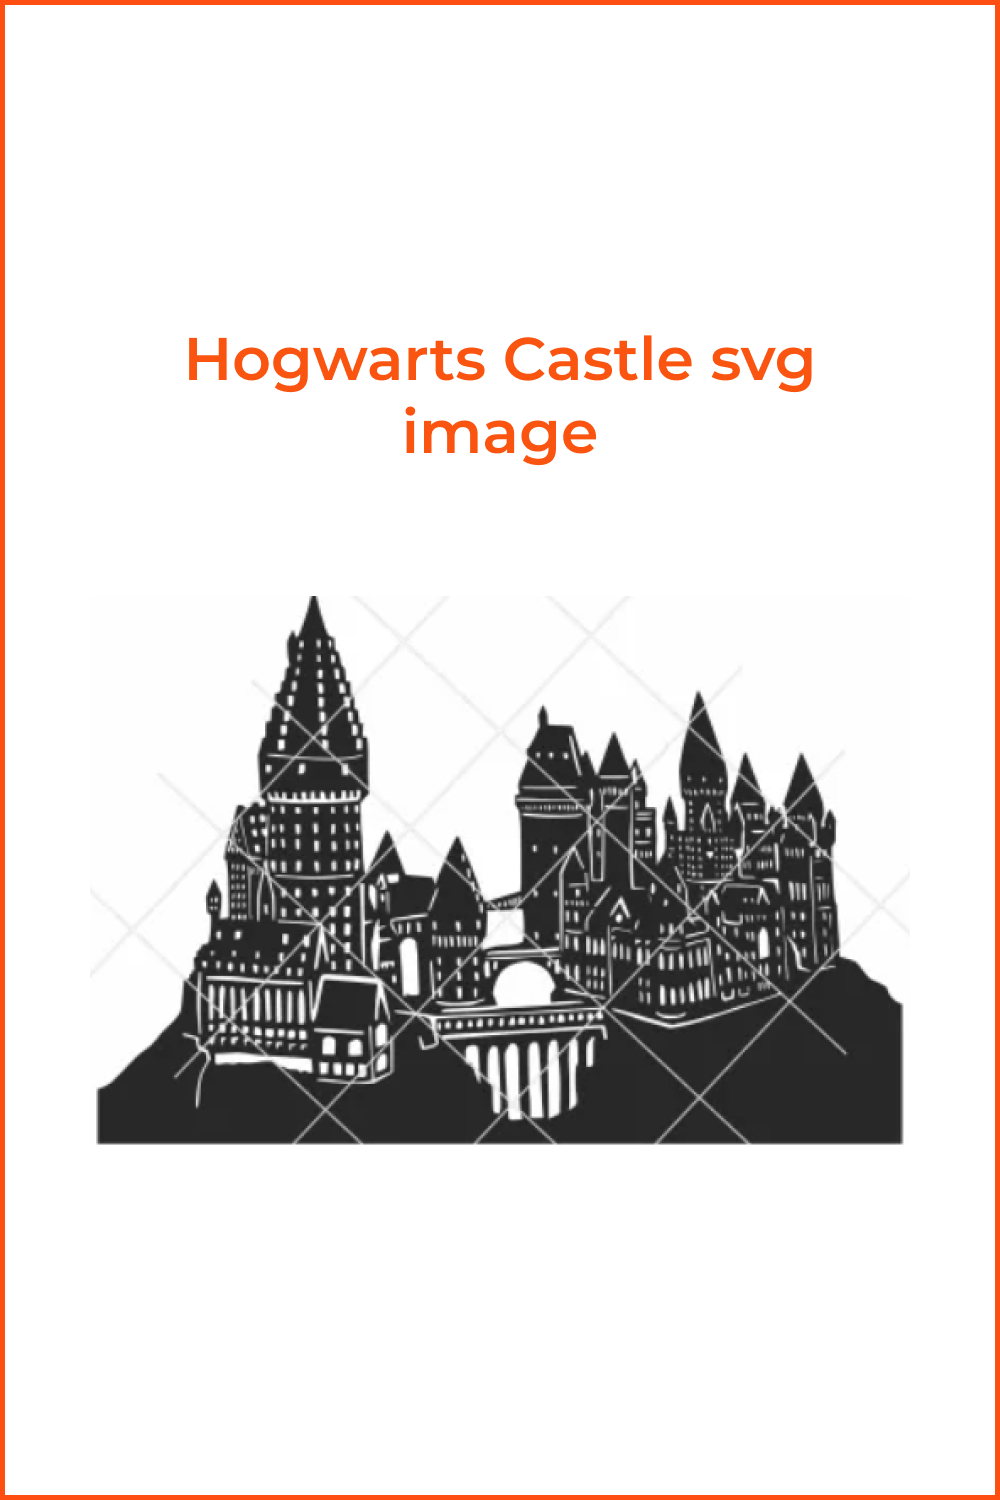 Hogwarts castle silhouette image in black.